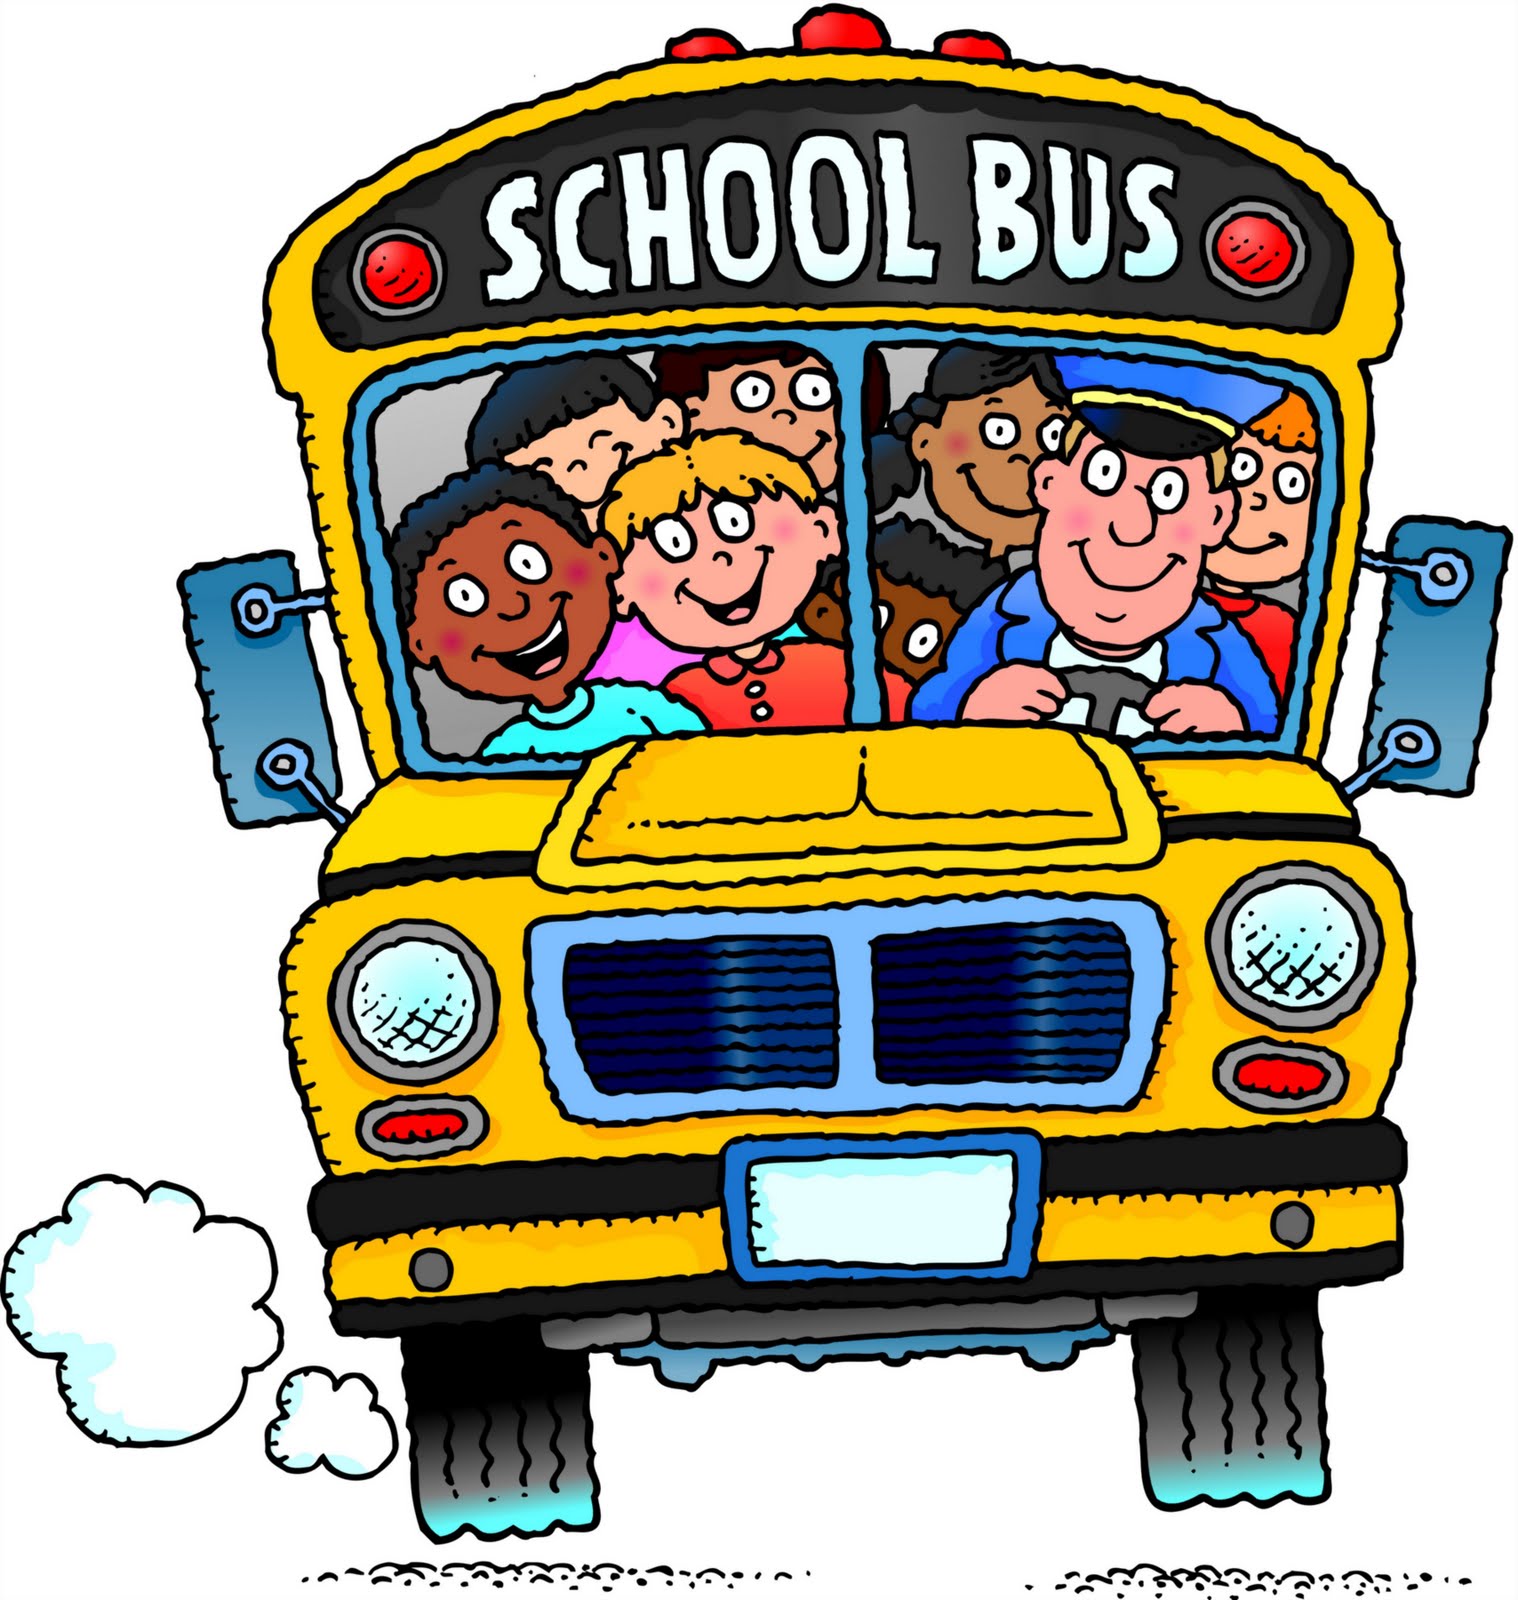 School bus to the school clipart - ClipartFox